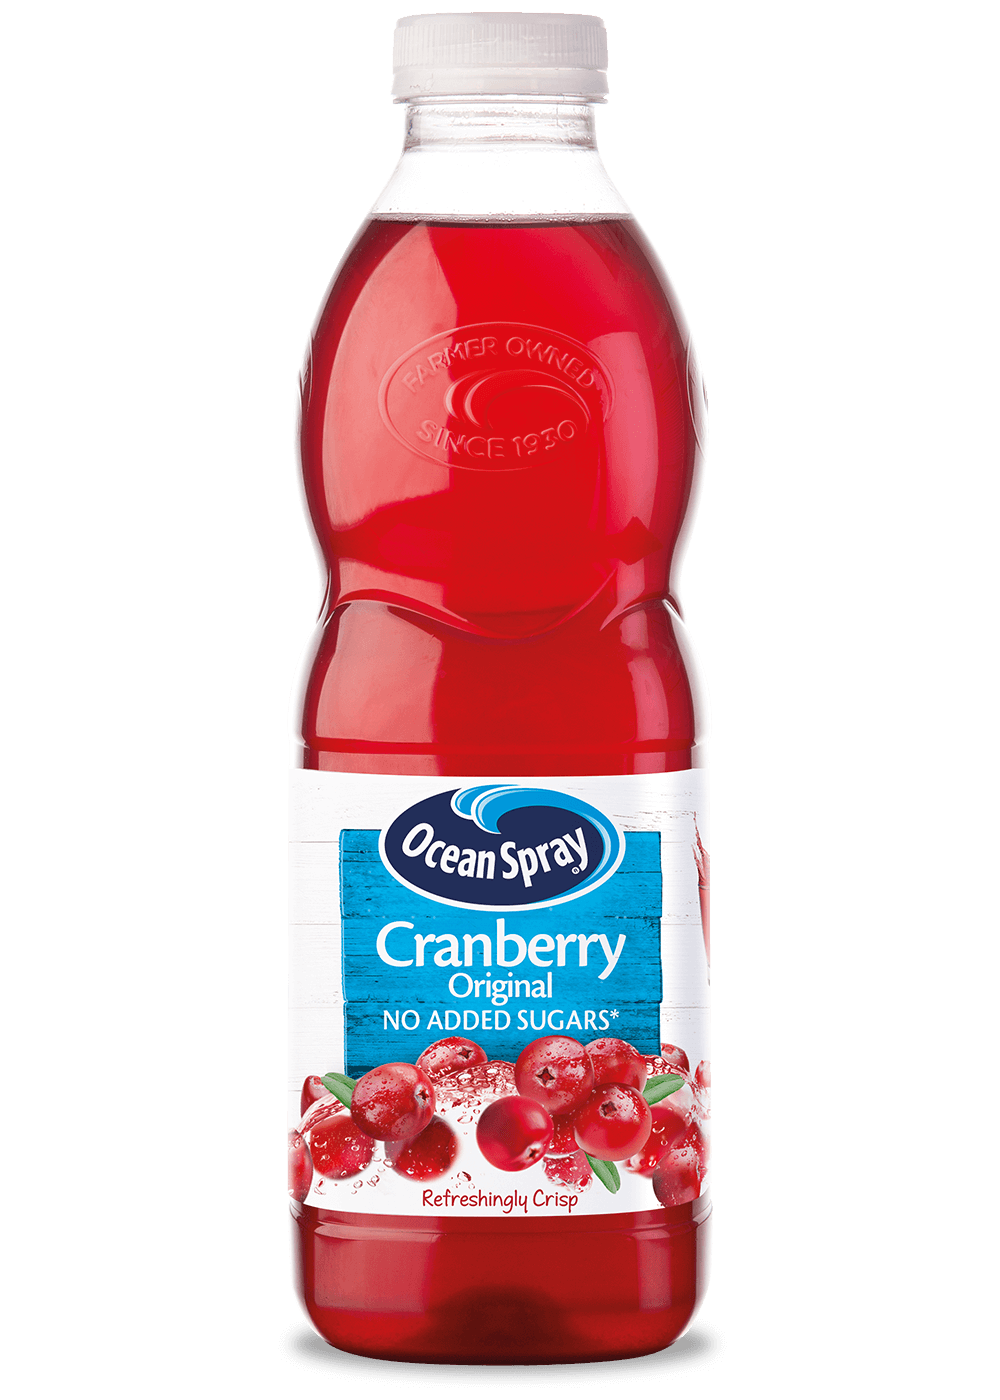 Chilled Cranberry Light Juice Drink Ocean Spray®